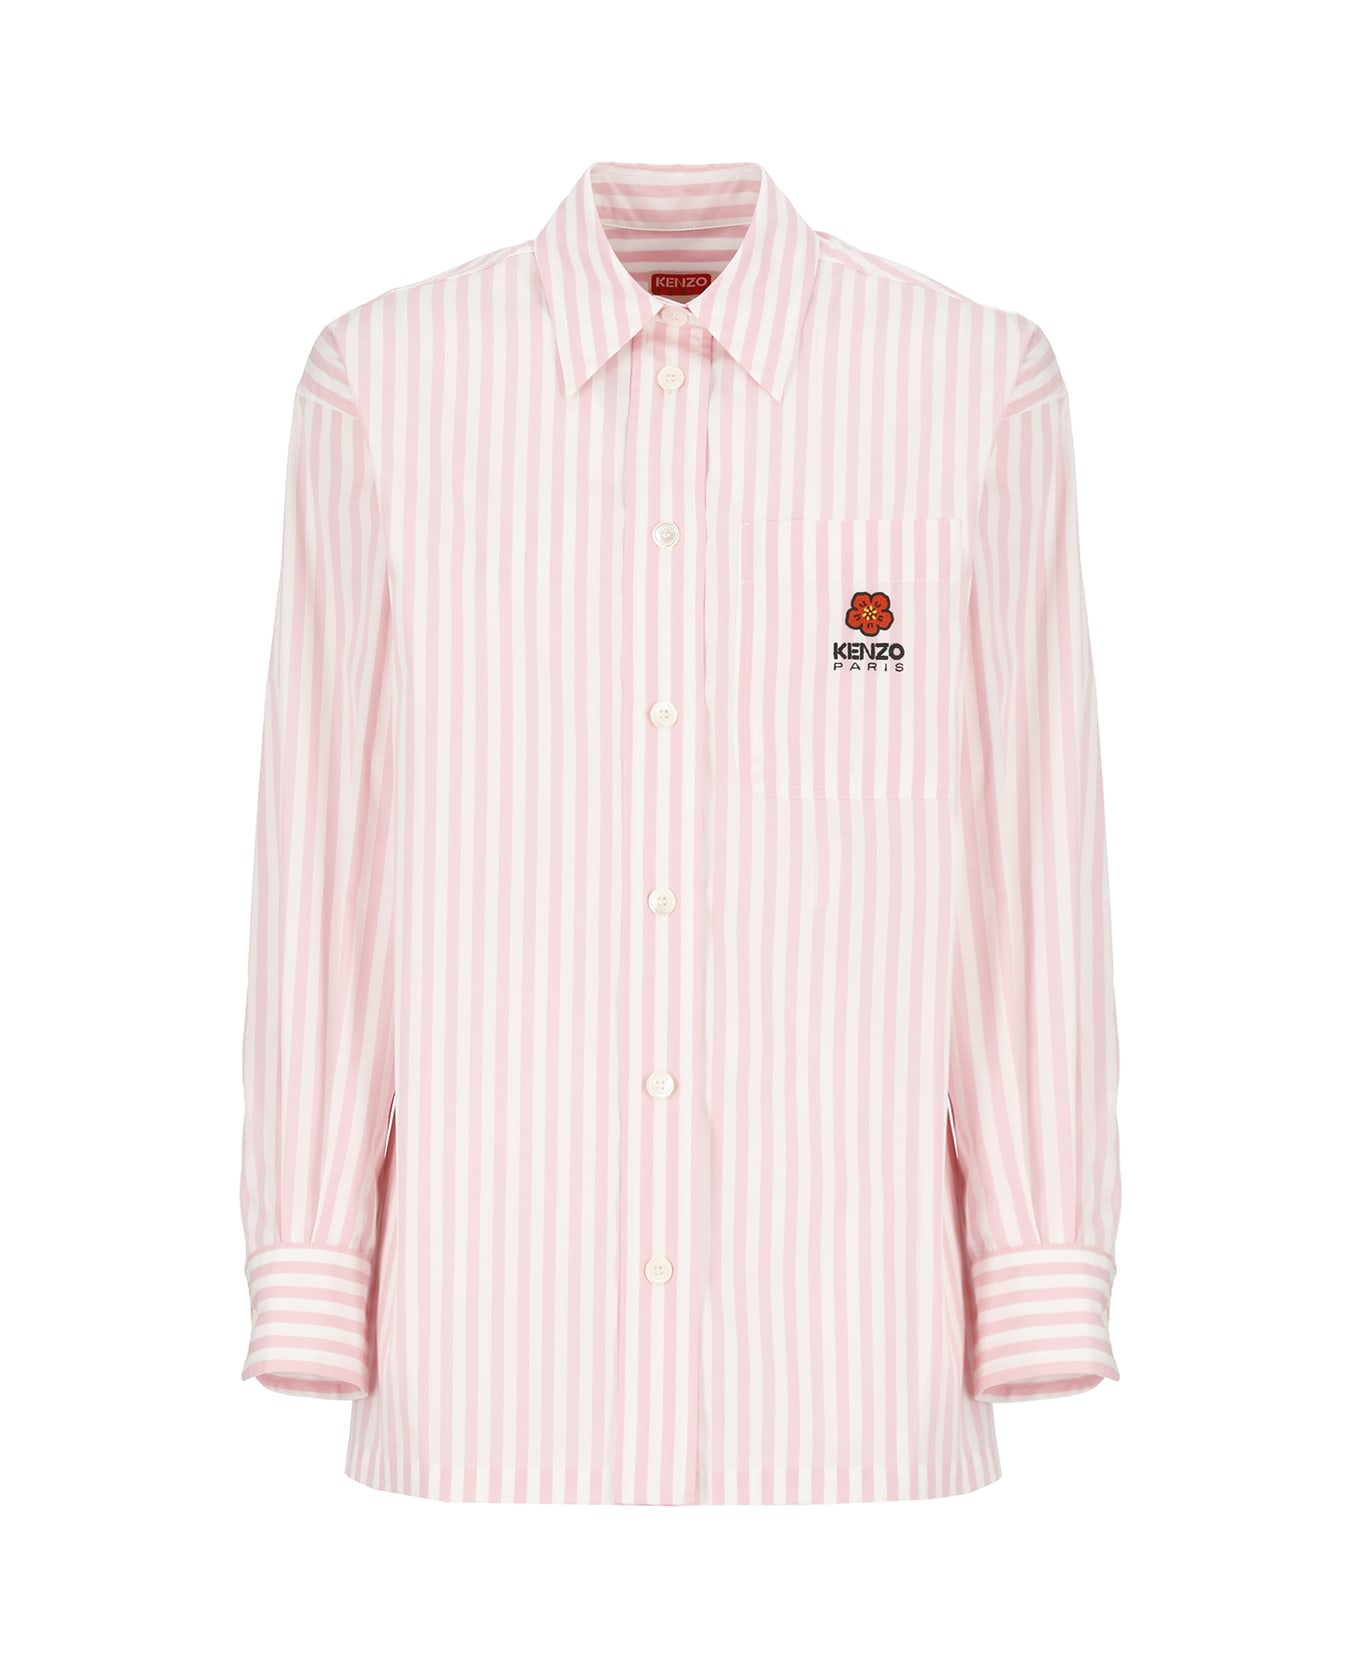 Kenzo Boke 2.0 Shirt - Faded Pink